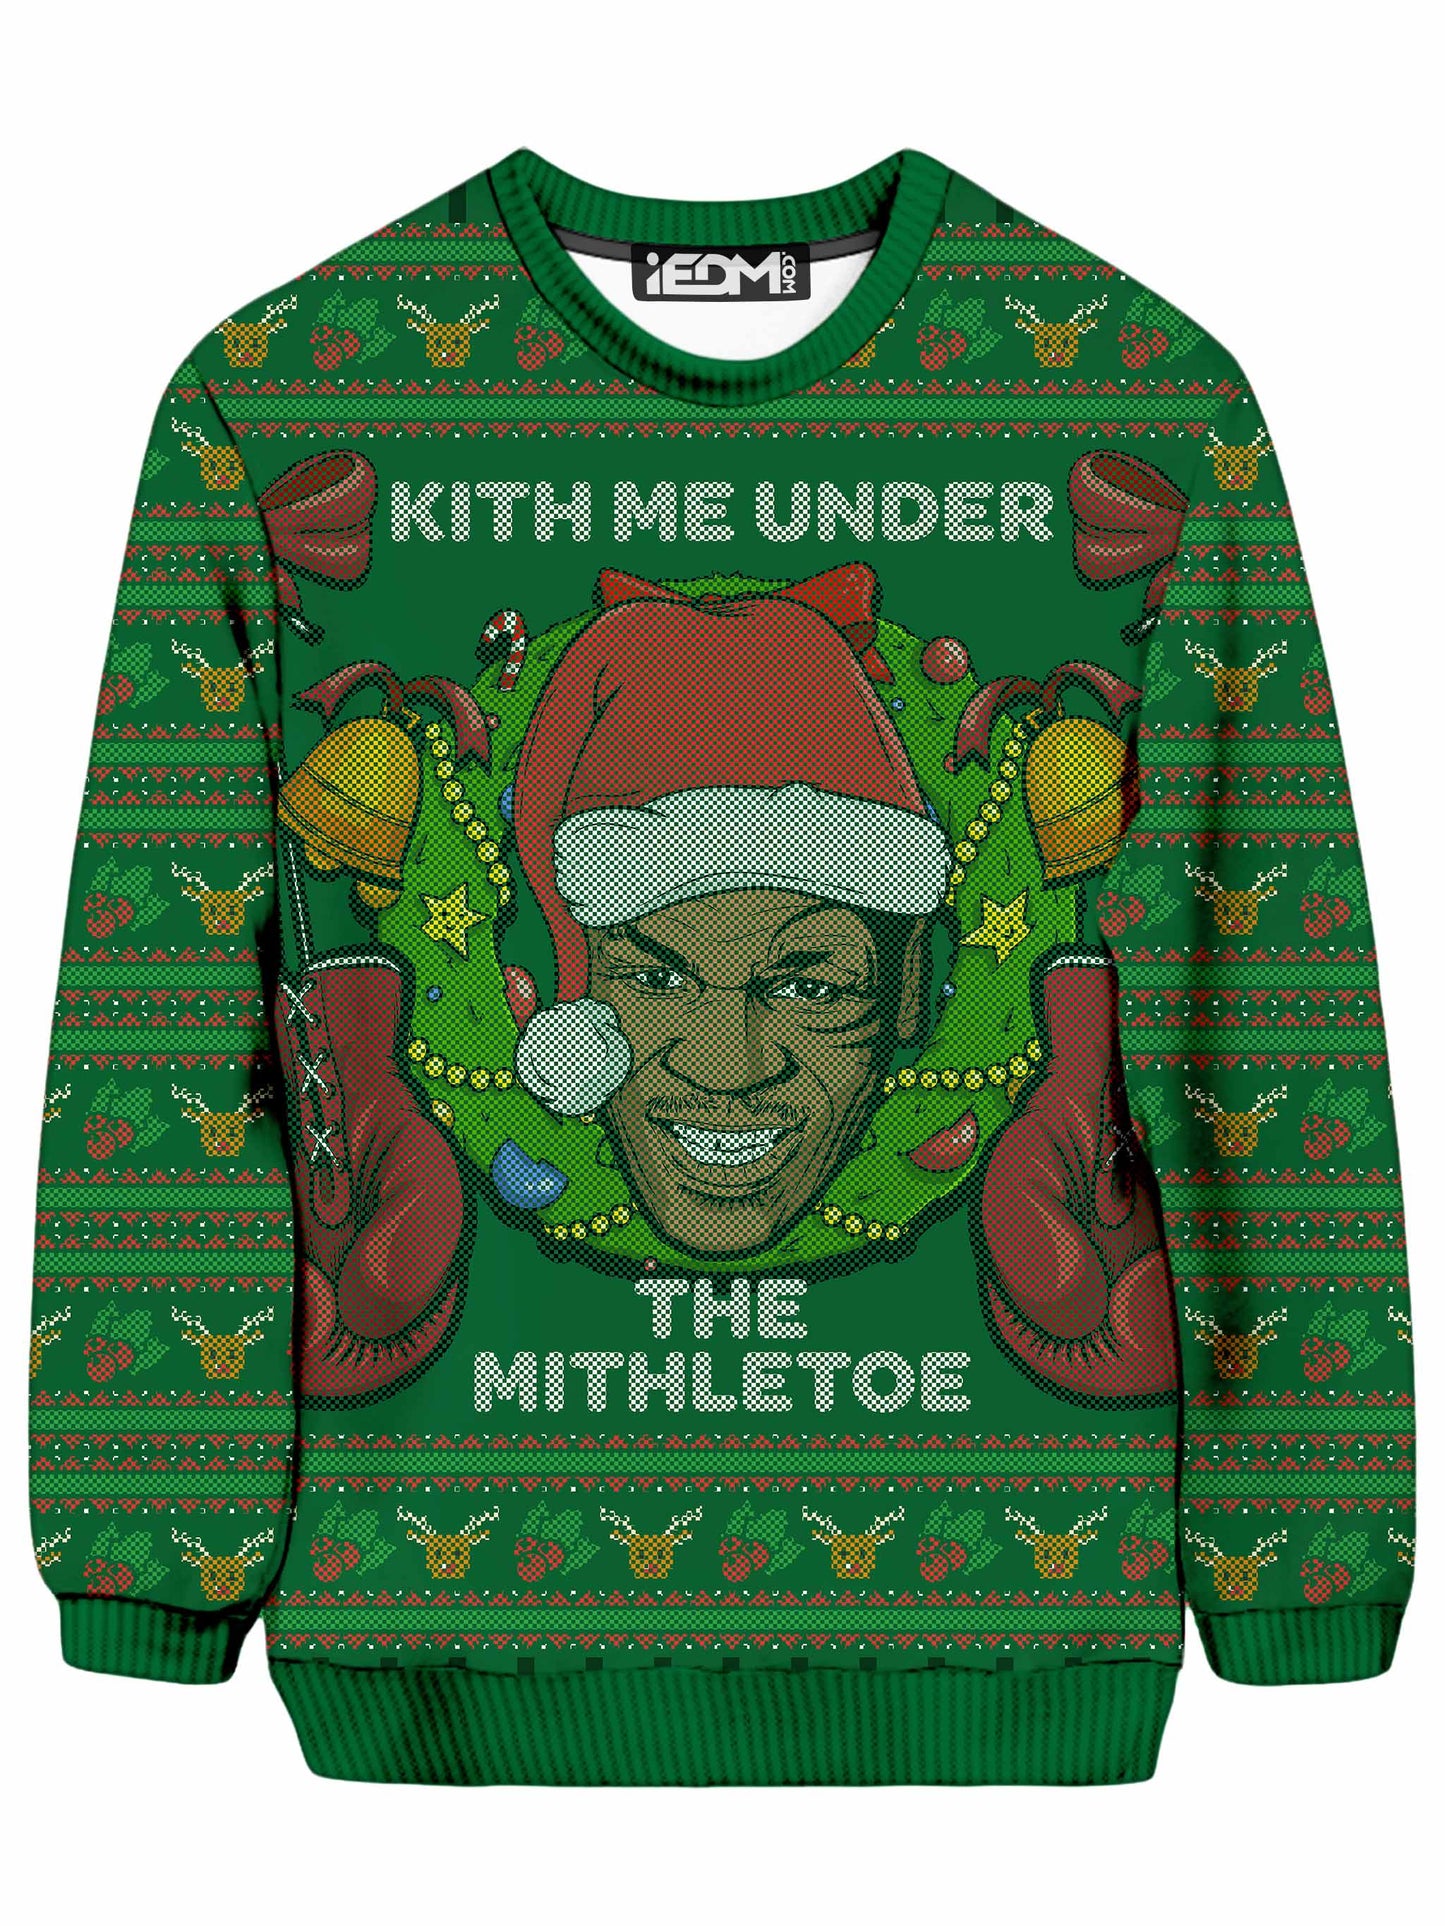 Mithletoe Ugly Sweatshirt, iEDM, | iEDM